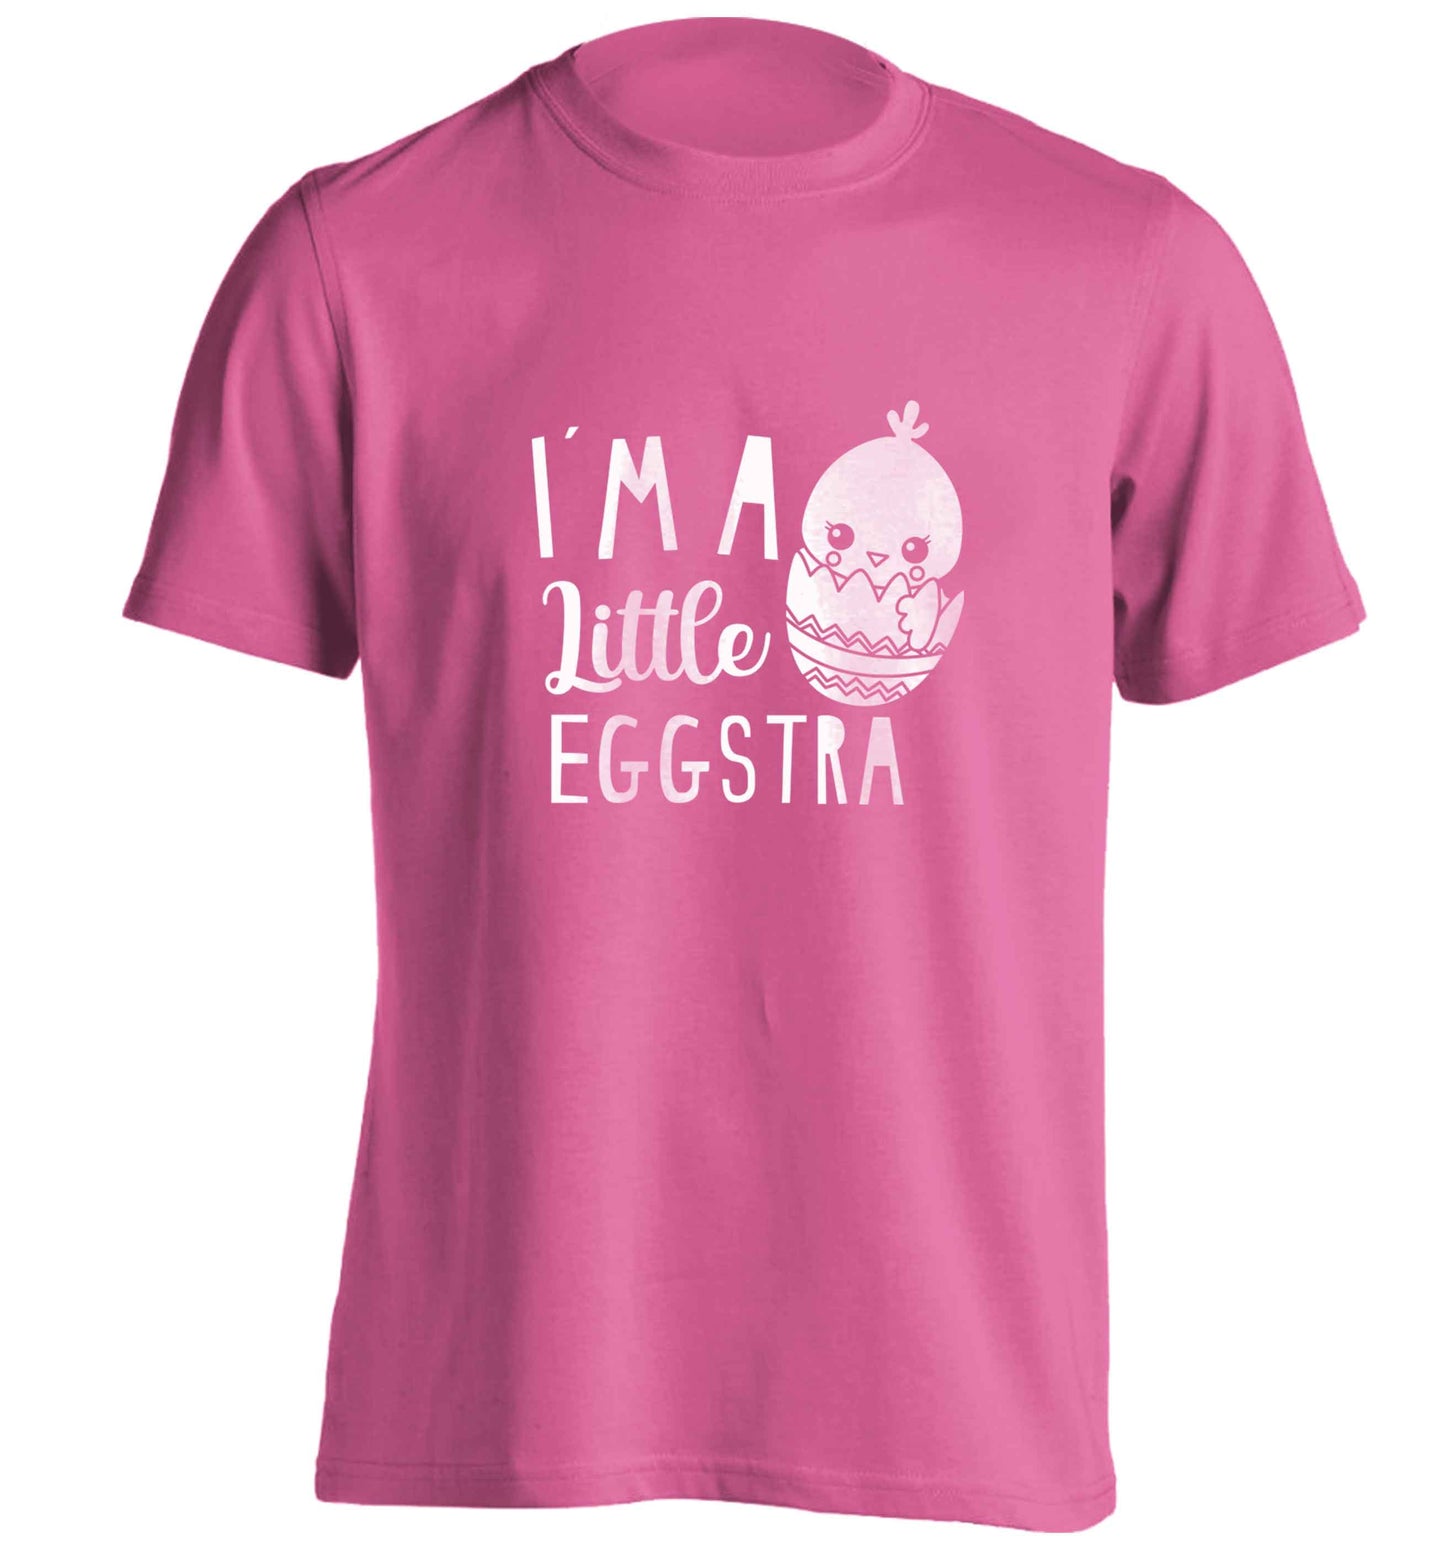 I'm a little eggstra adults unisex pink Tshirt 2XL